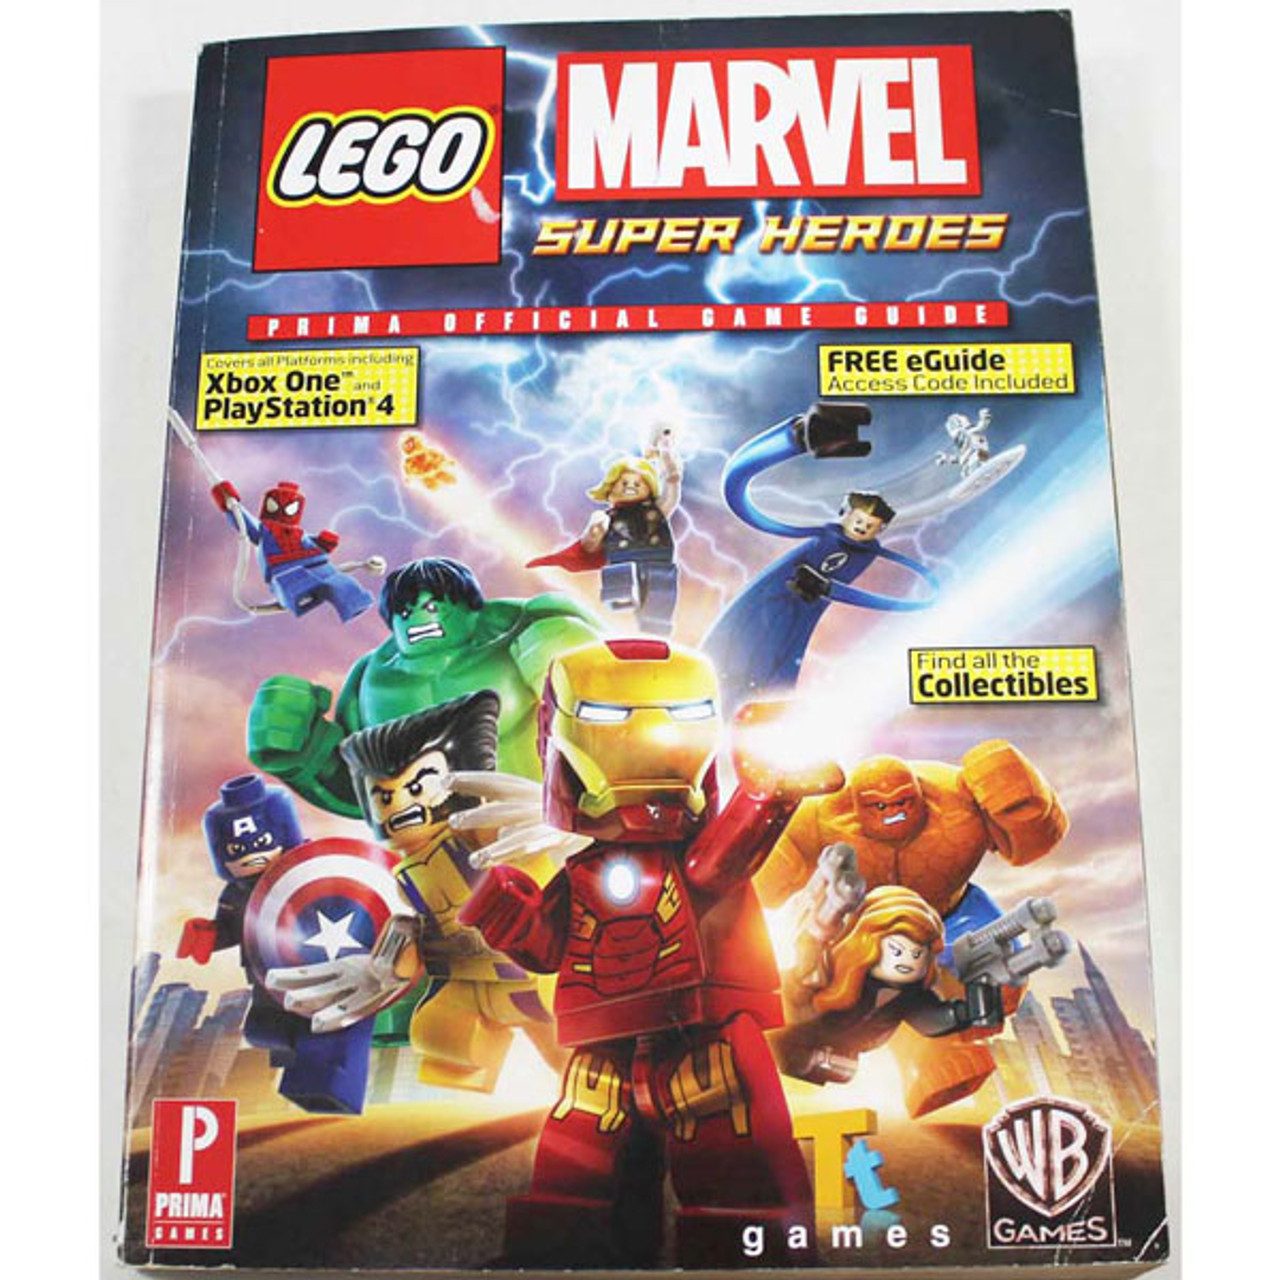 LEGO Marvel Super Heroes 1 Guide - LEGO Marvel Collection Guide - IGN